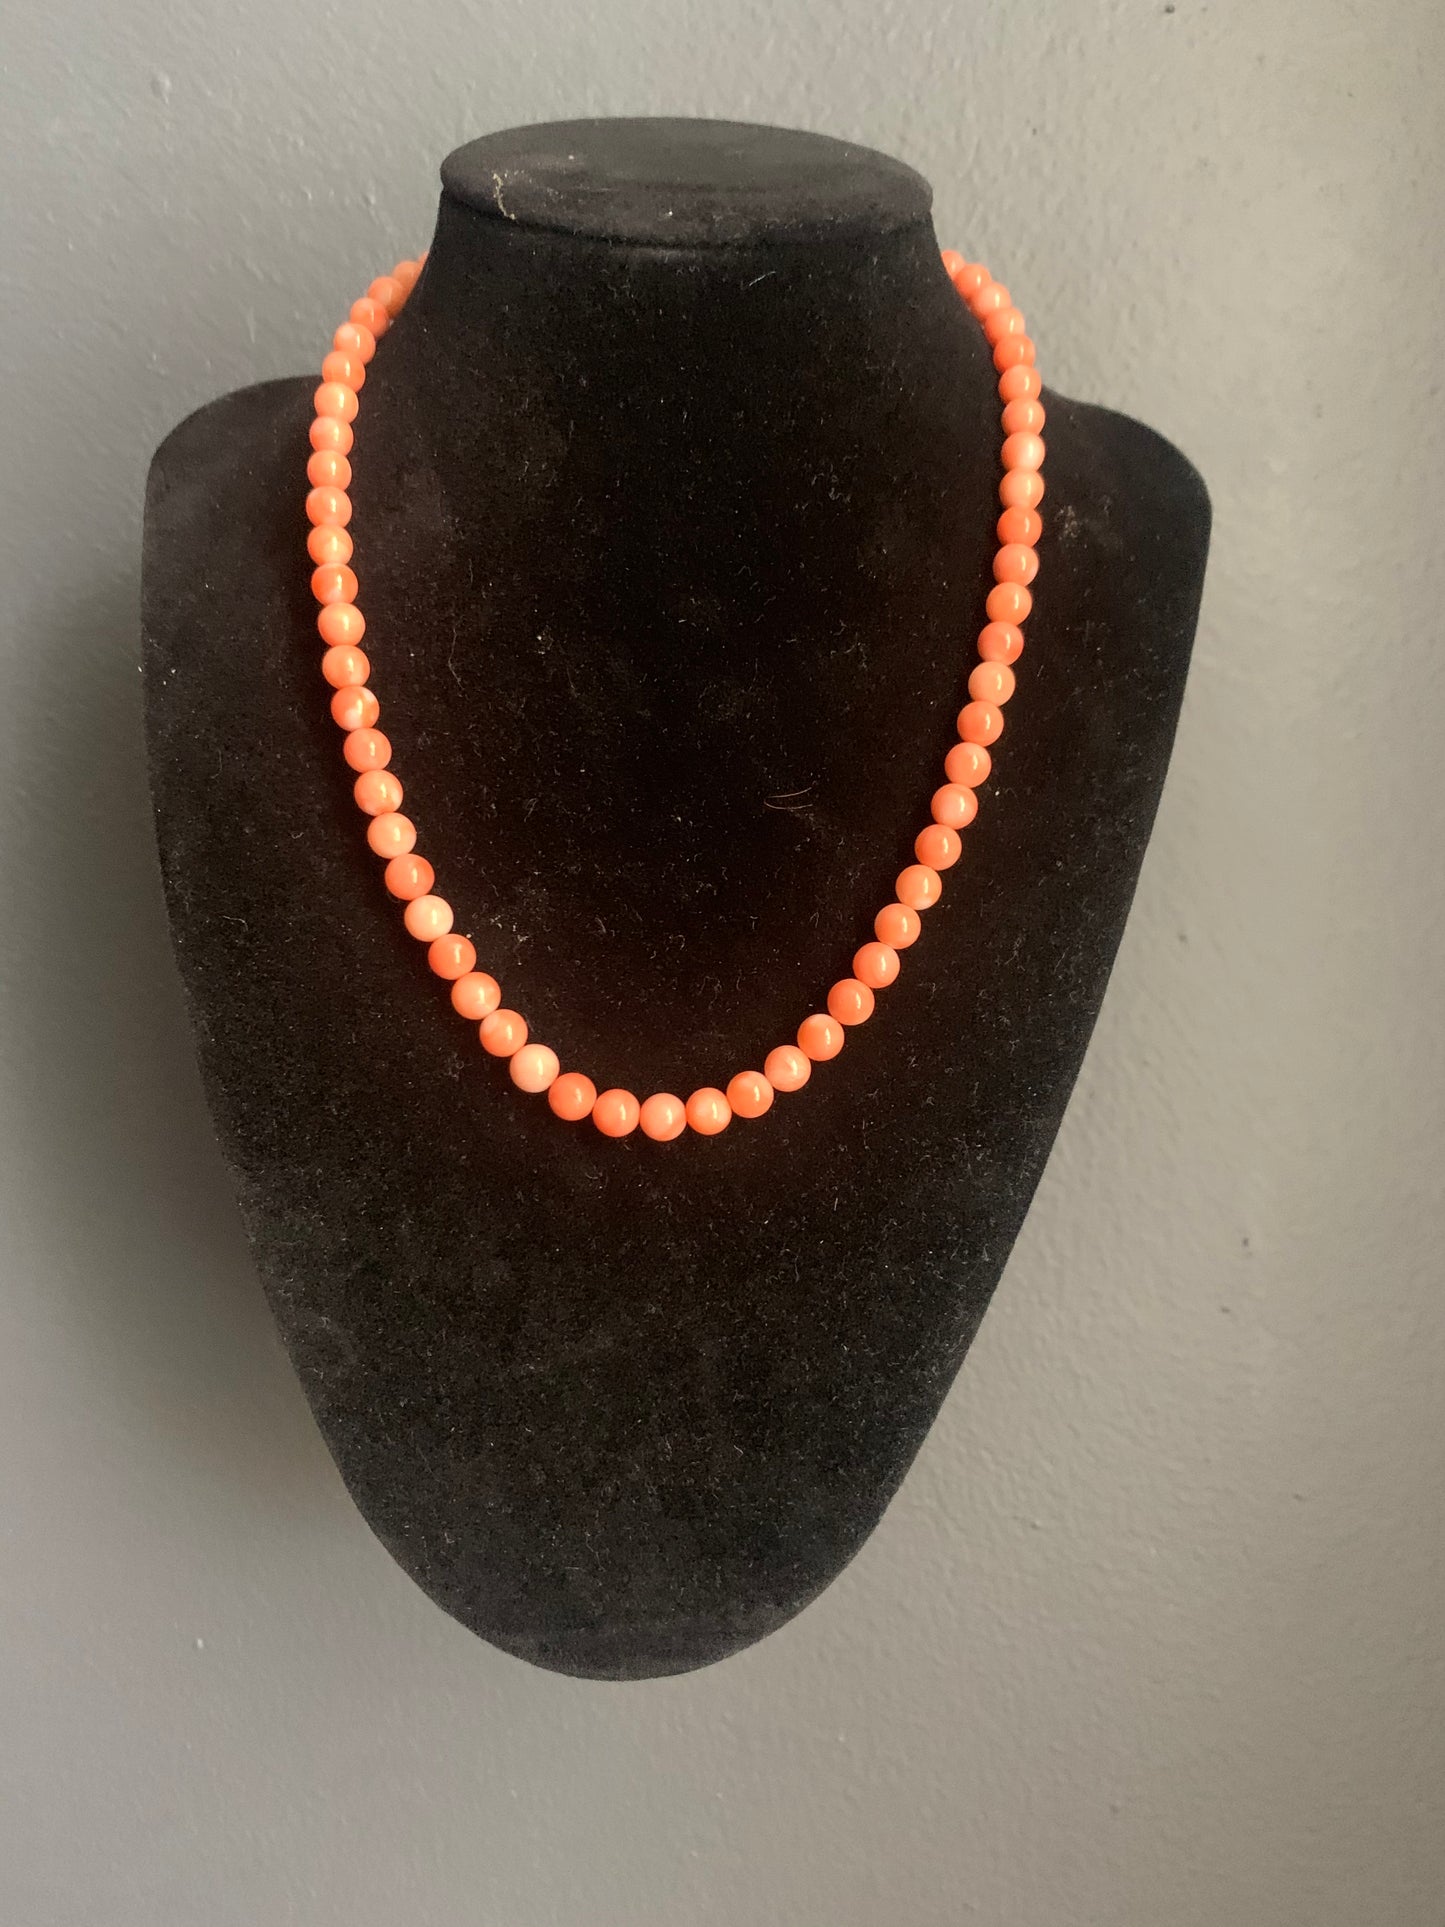 A salmon color coral necklace